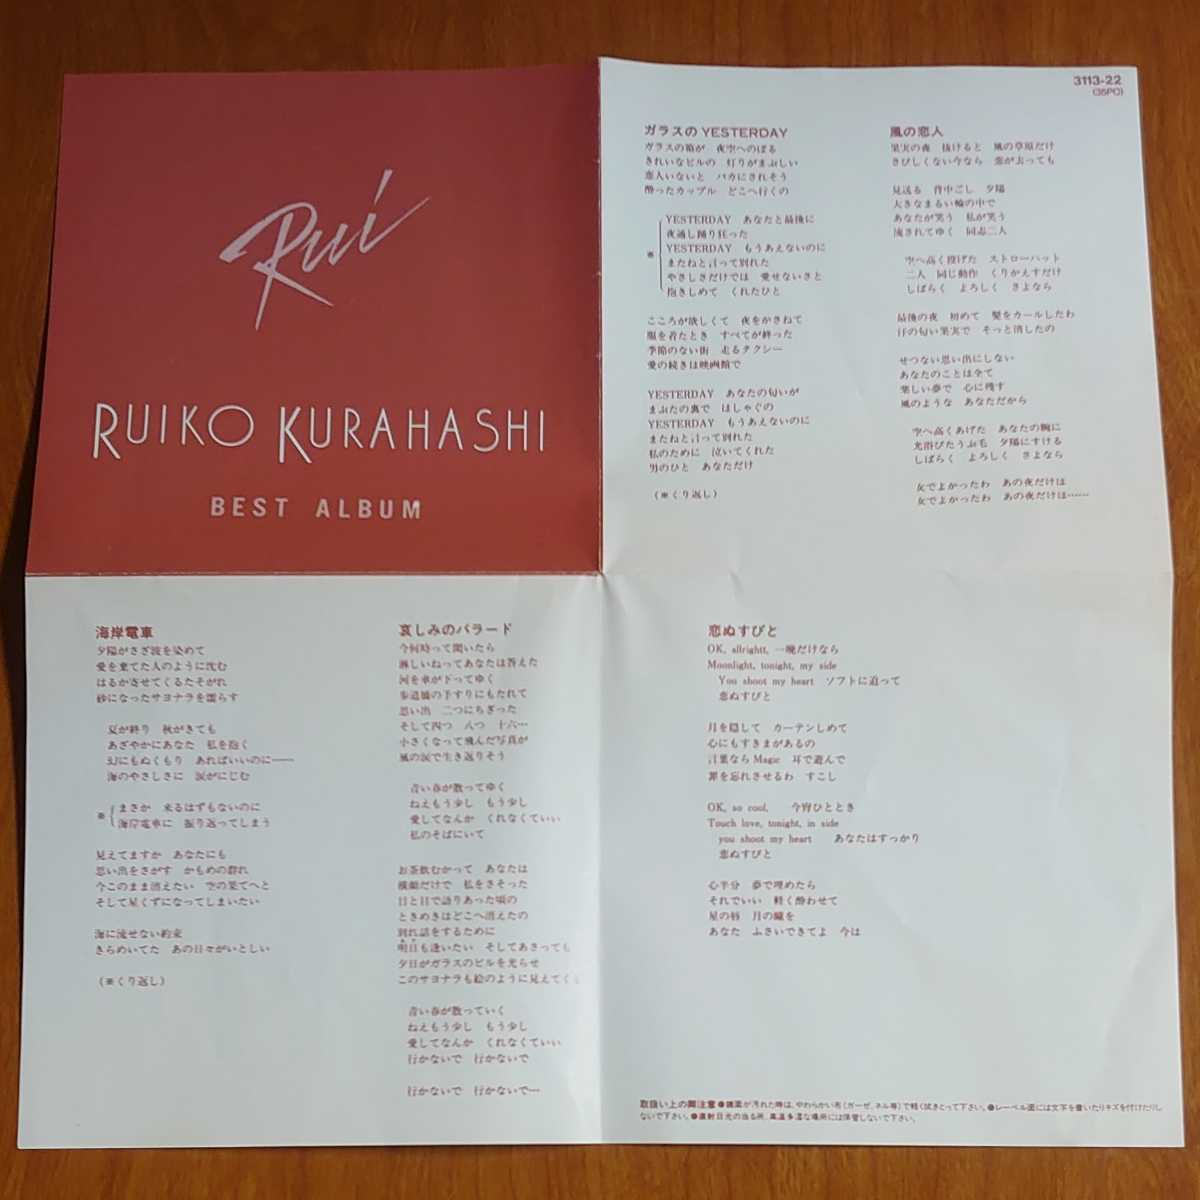  Kurahashi Ruiko лучший * альбом CD старый стандарт цвет этикетка CRS печать...k-926/ruiko kurahashi/best/ Kisugi Takao / Ono Katsuo /...